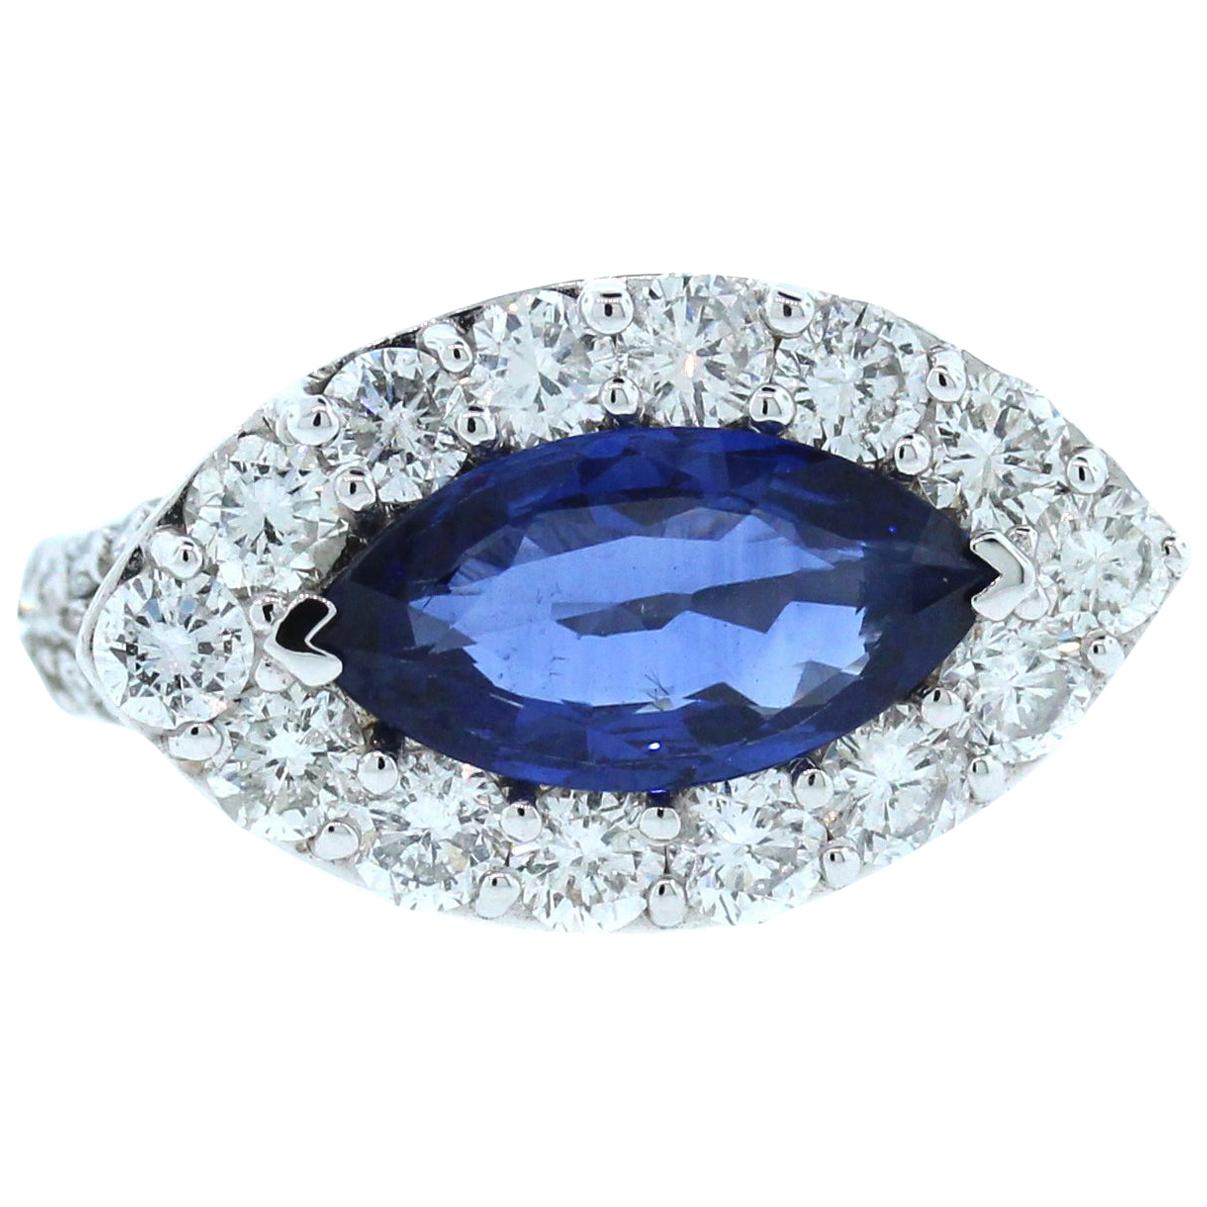 2.55 Carat Marquise Cut Blue Sapphire Diamond 18 Karat White Gold Cocktail Ring For Sale